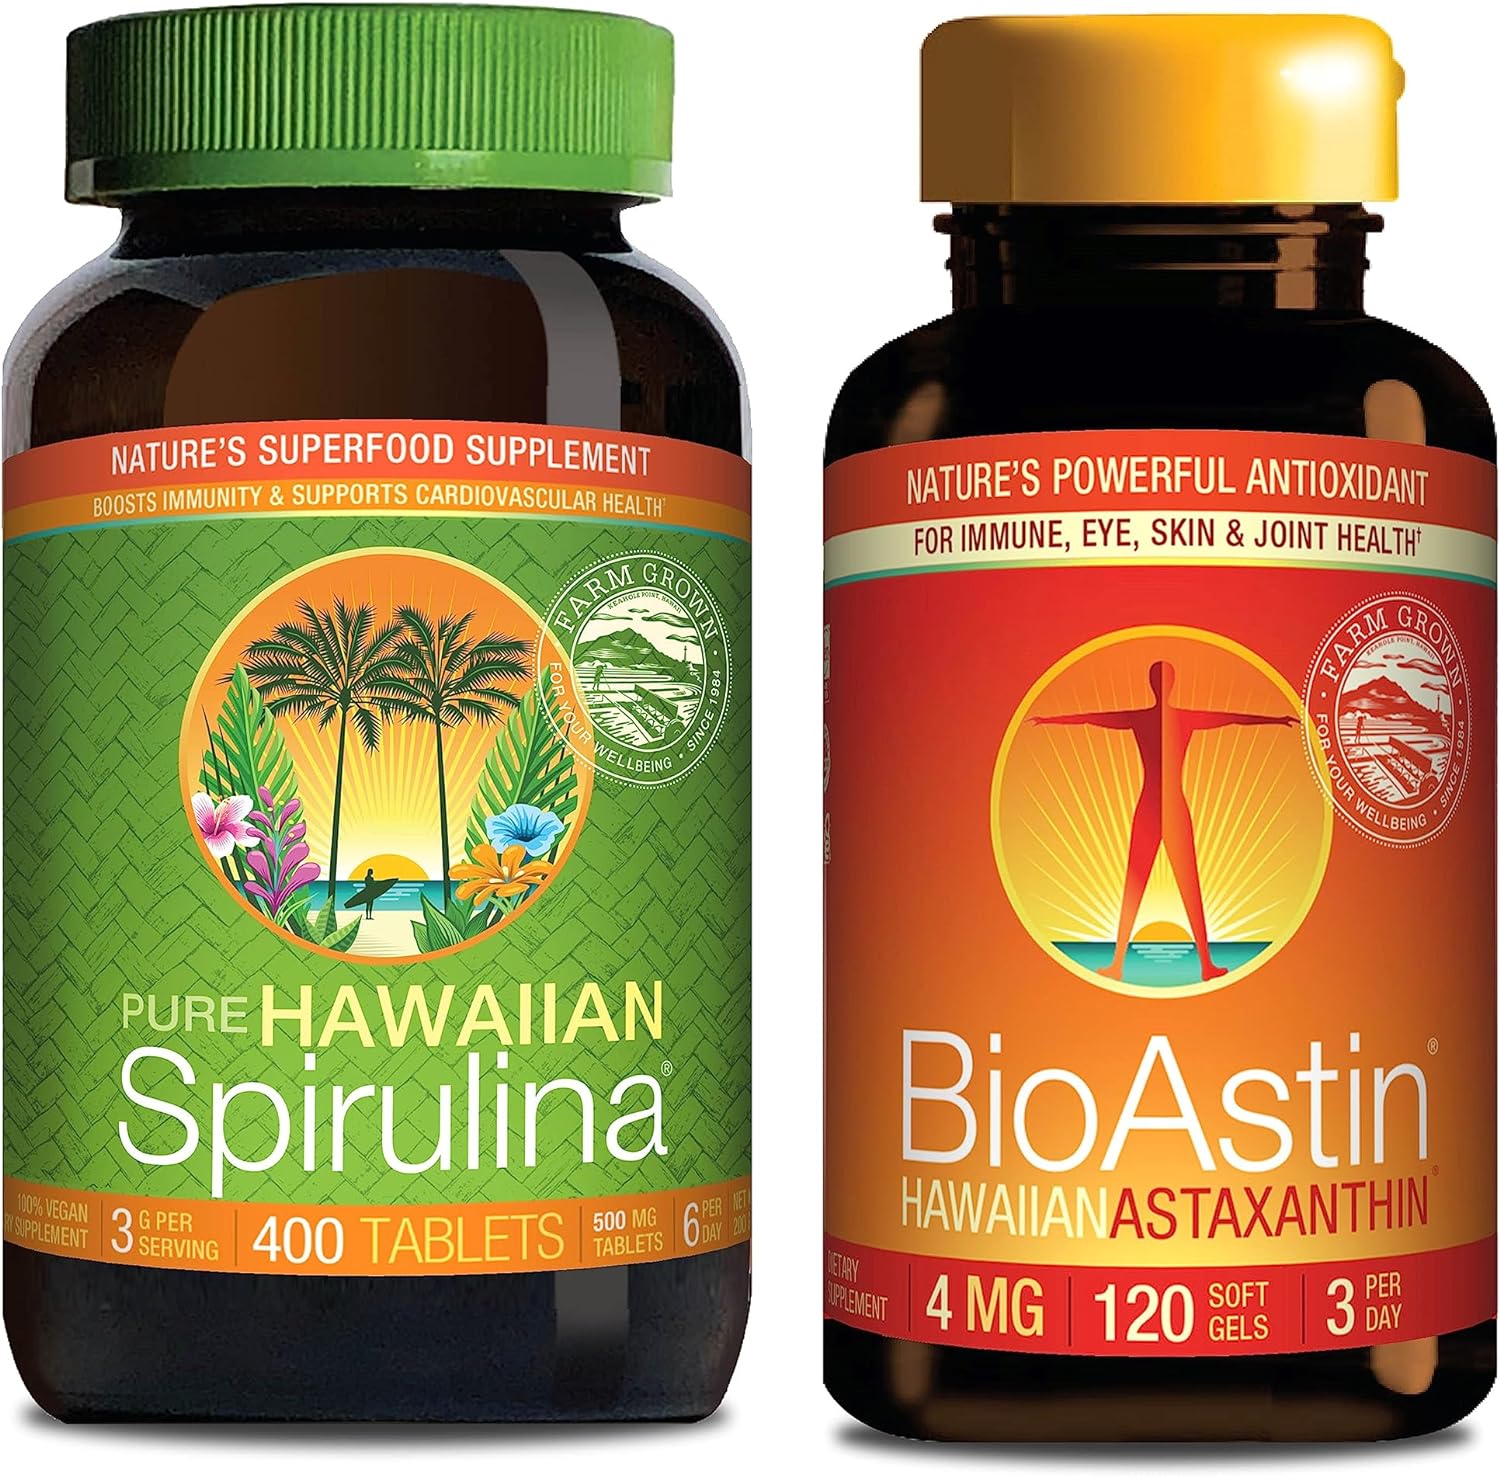 Bioastin Hawaiian Astaxanthin 4mg Review Vitamin Reviewer 